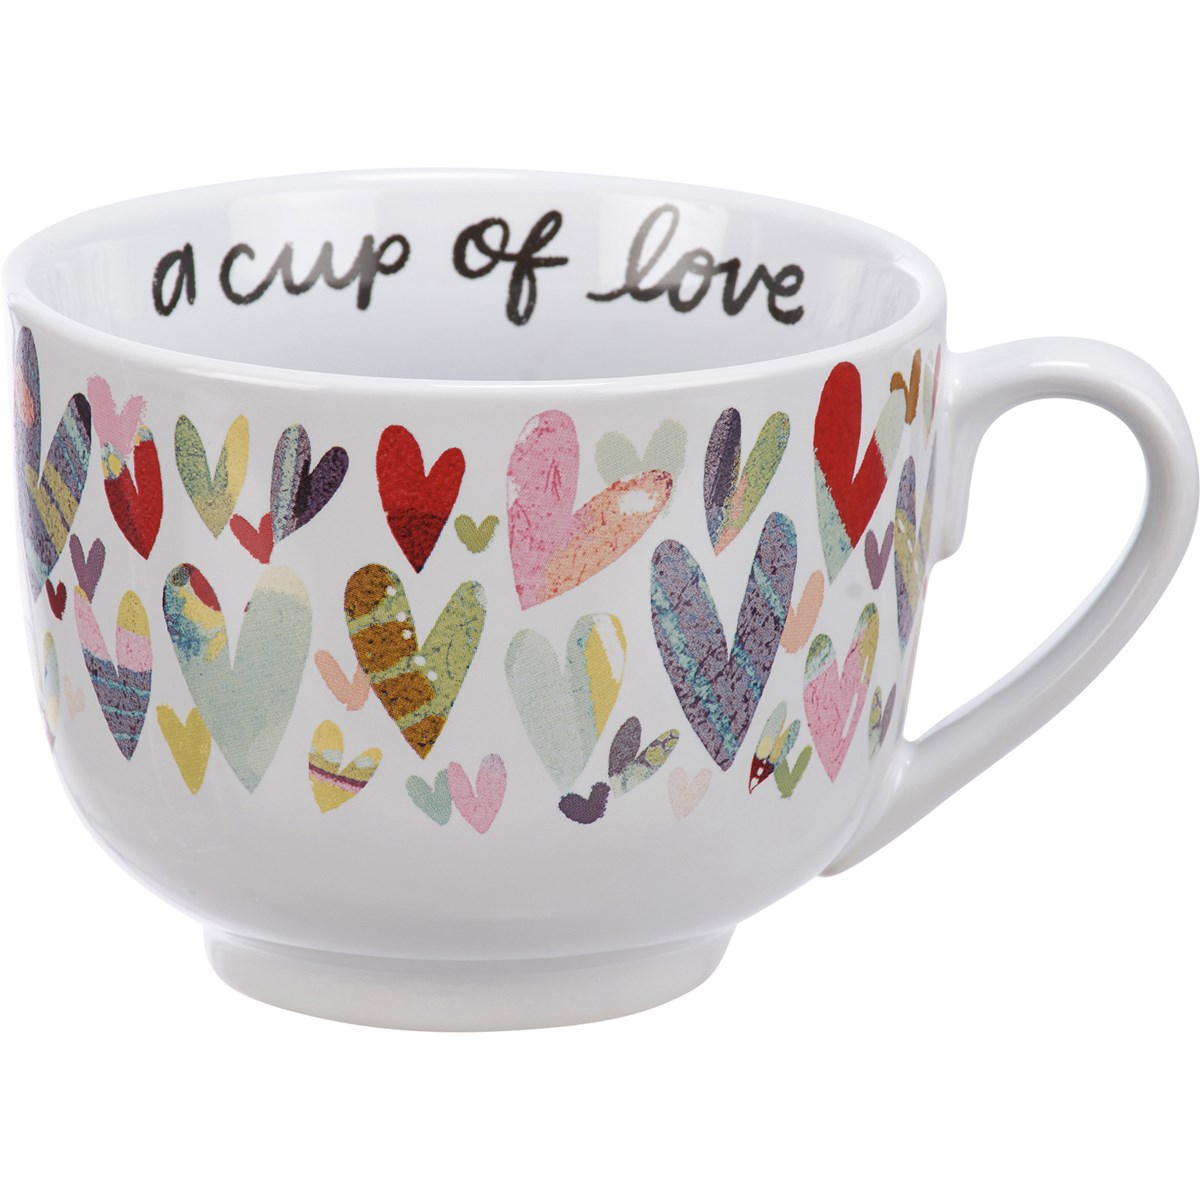 Cup of Love mug